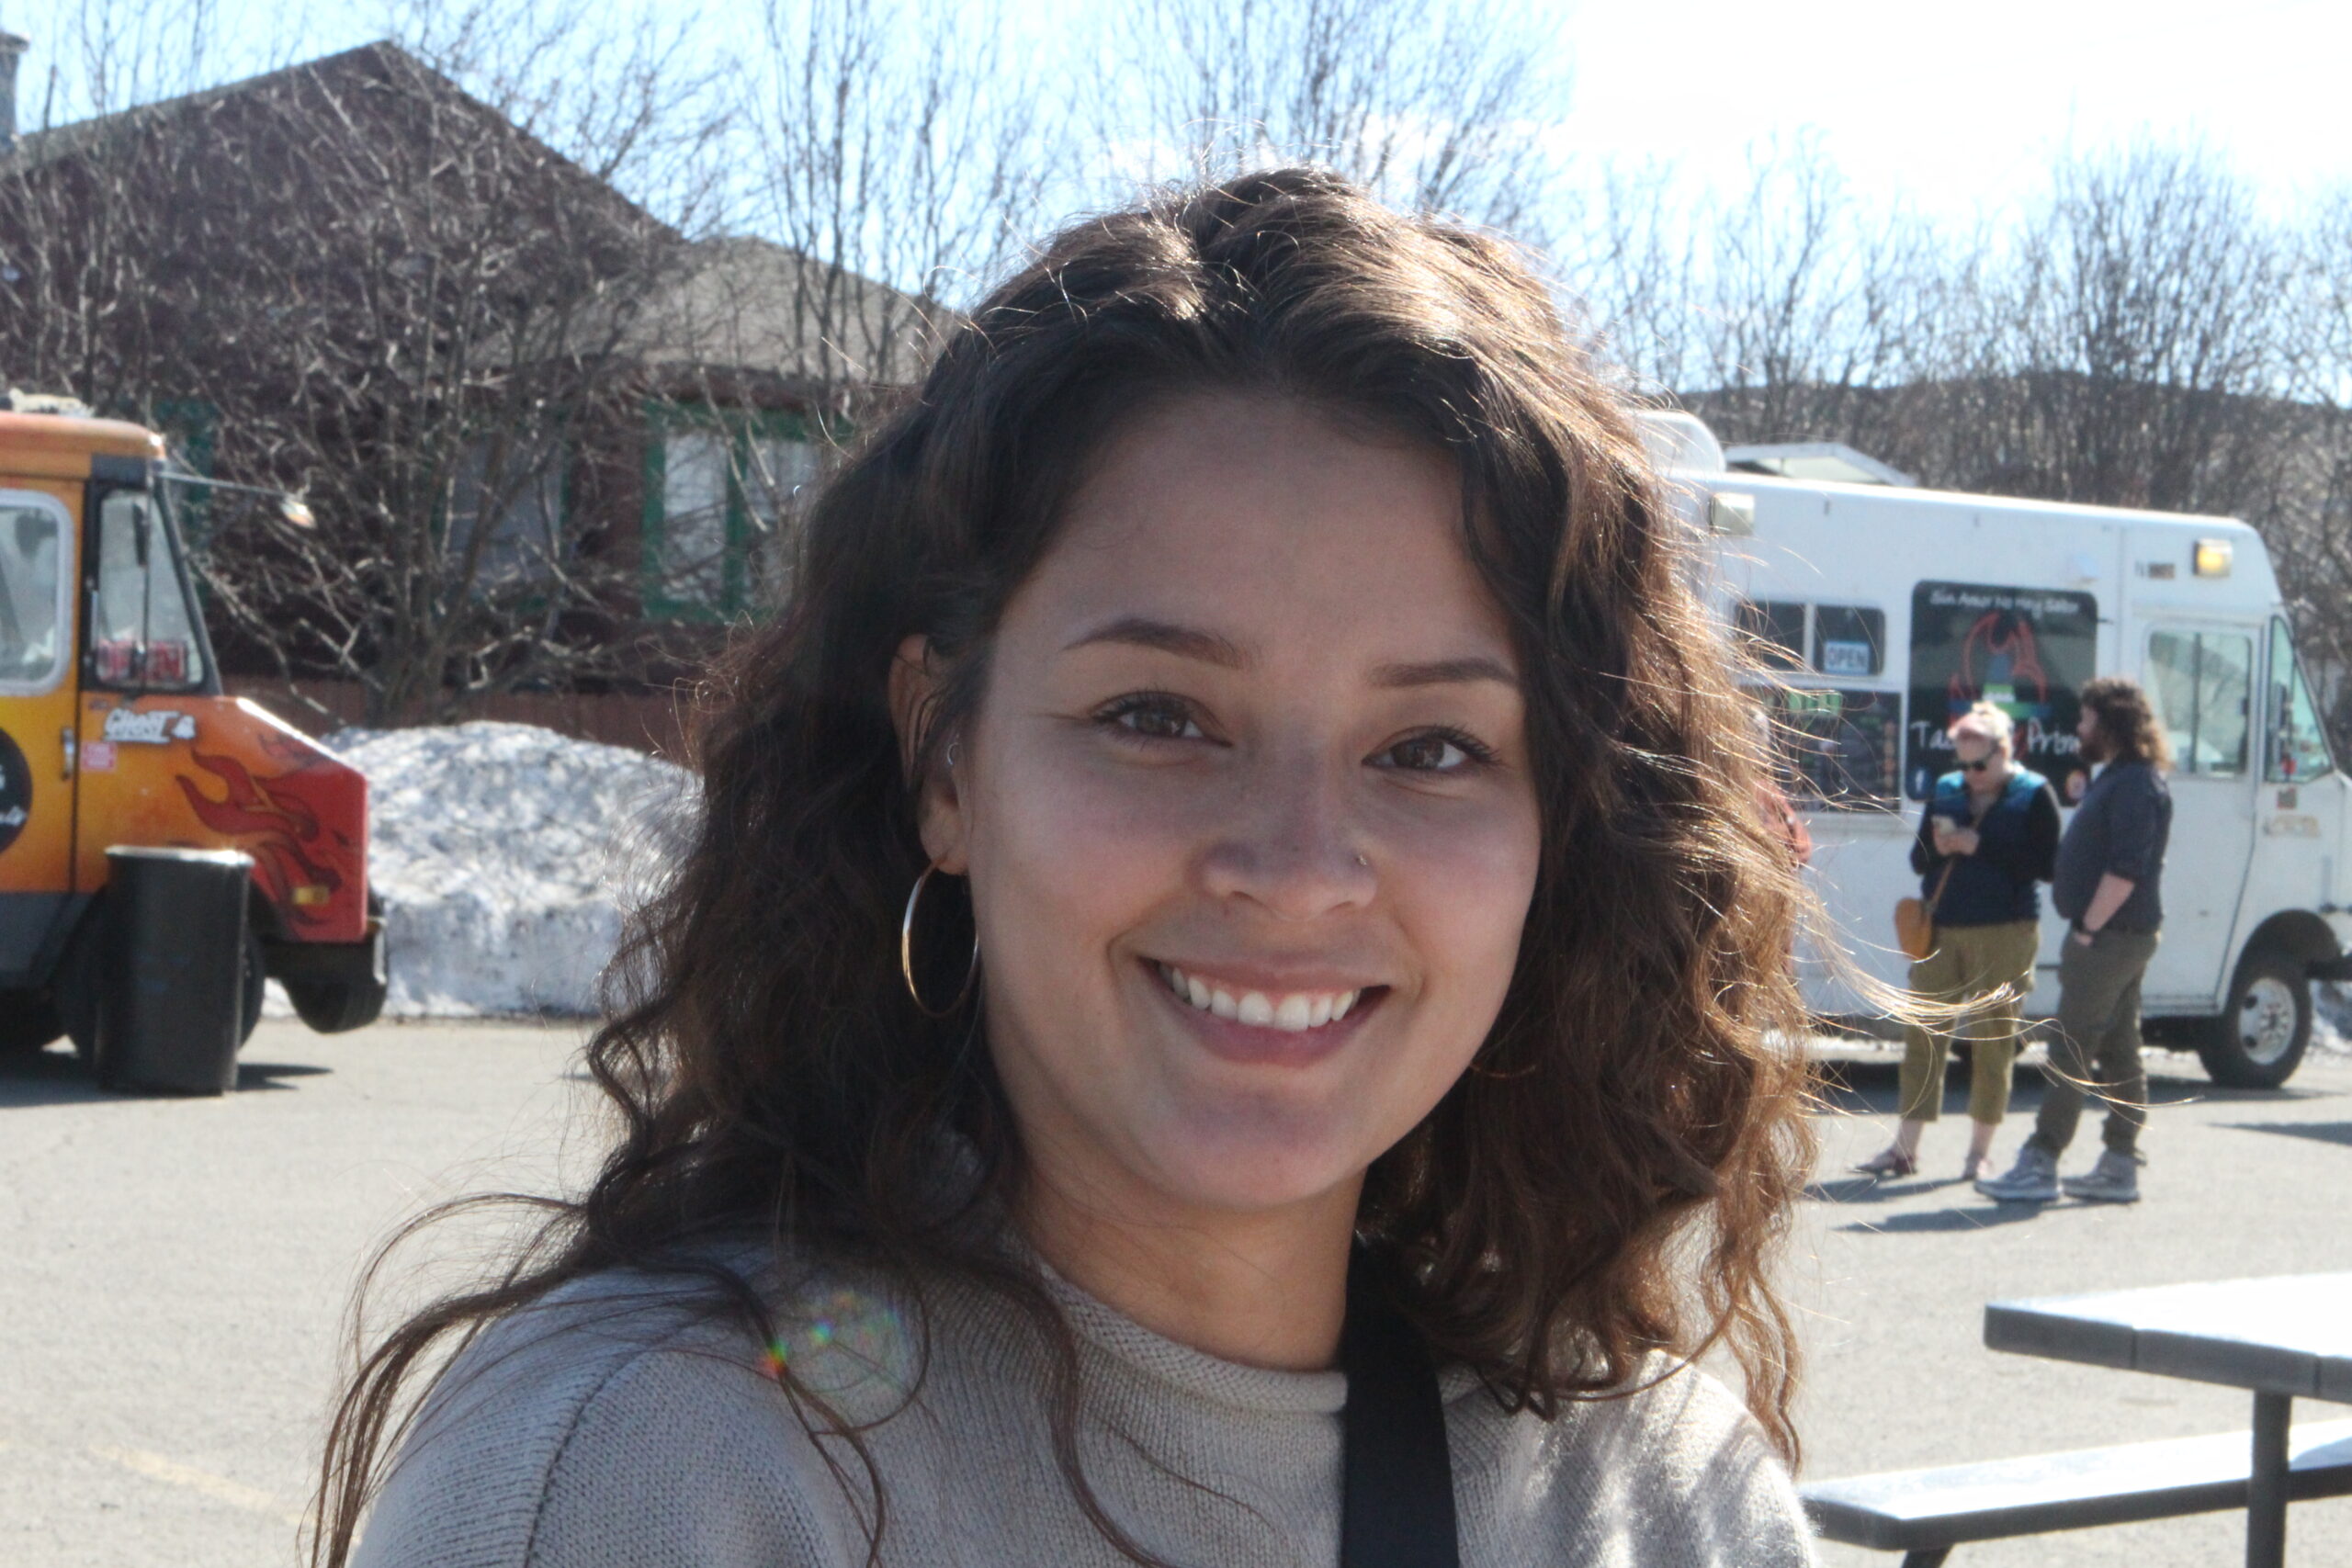 a woman smiles near food trucks